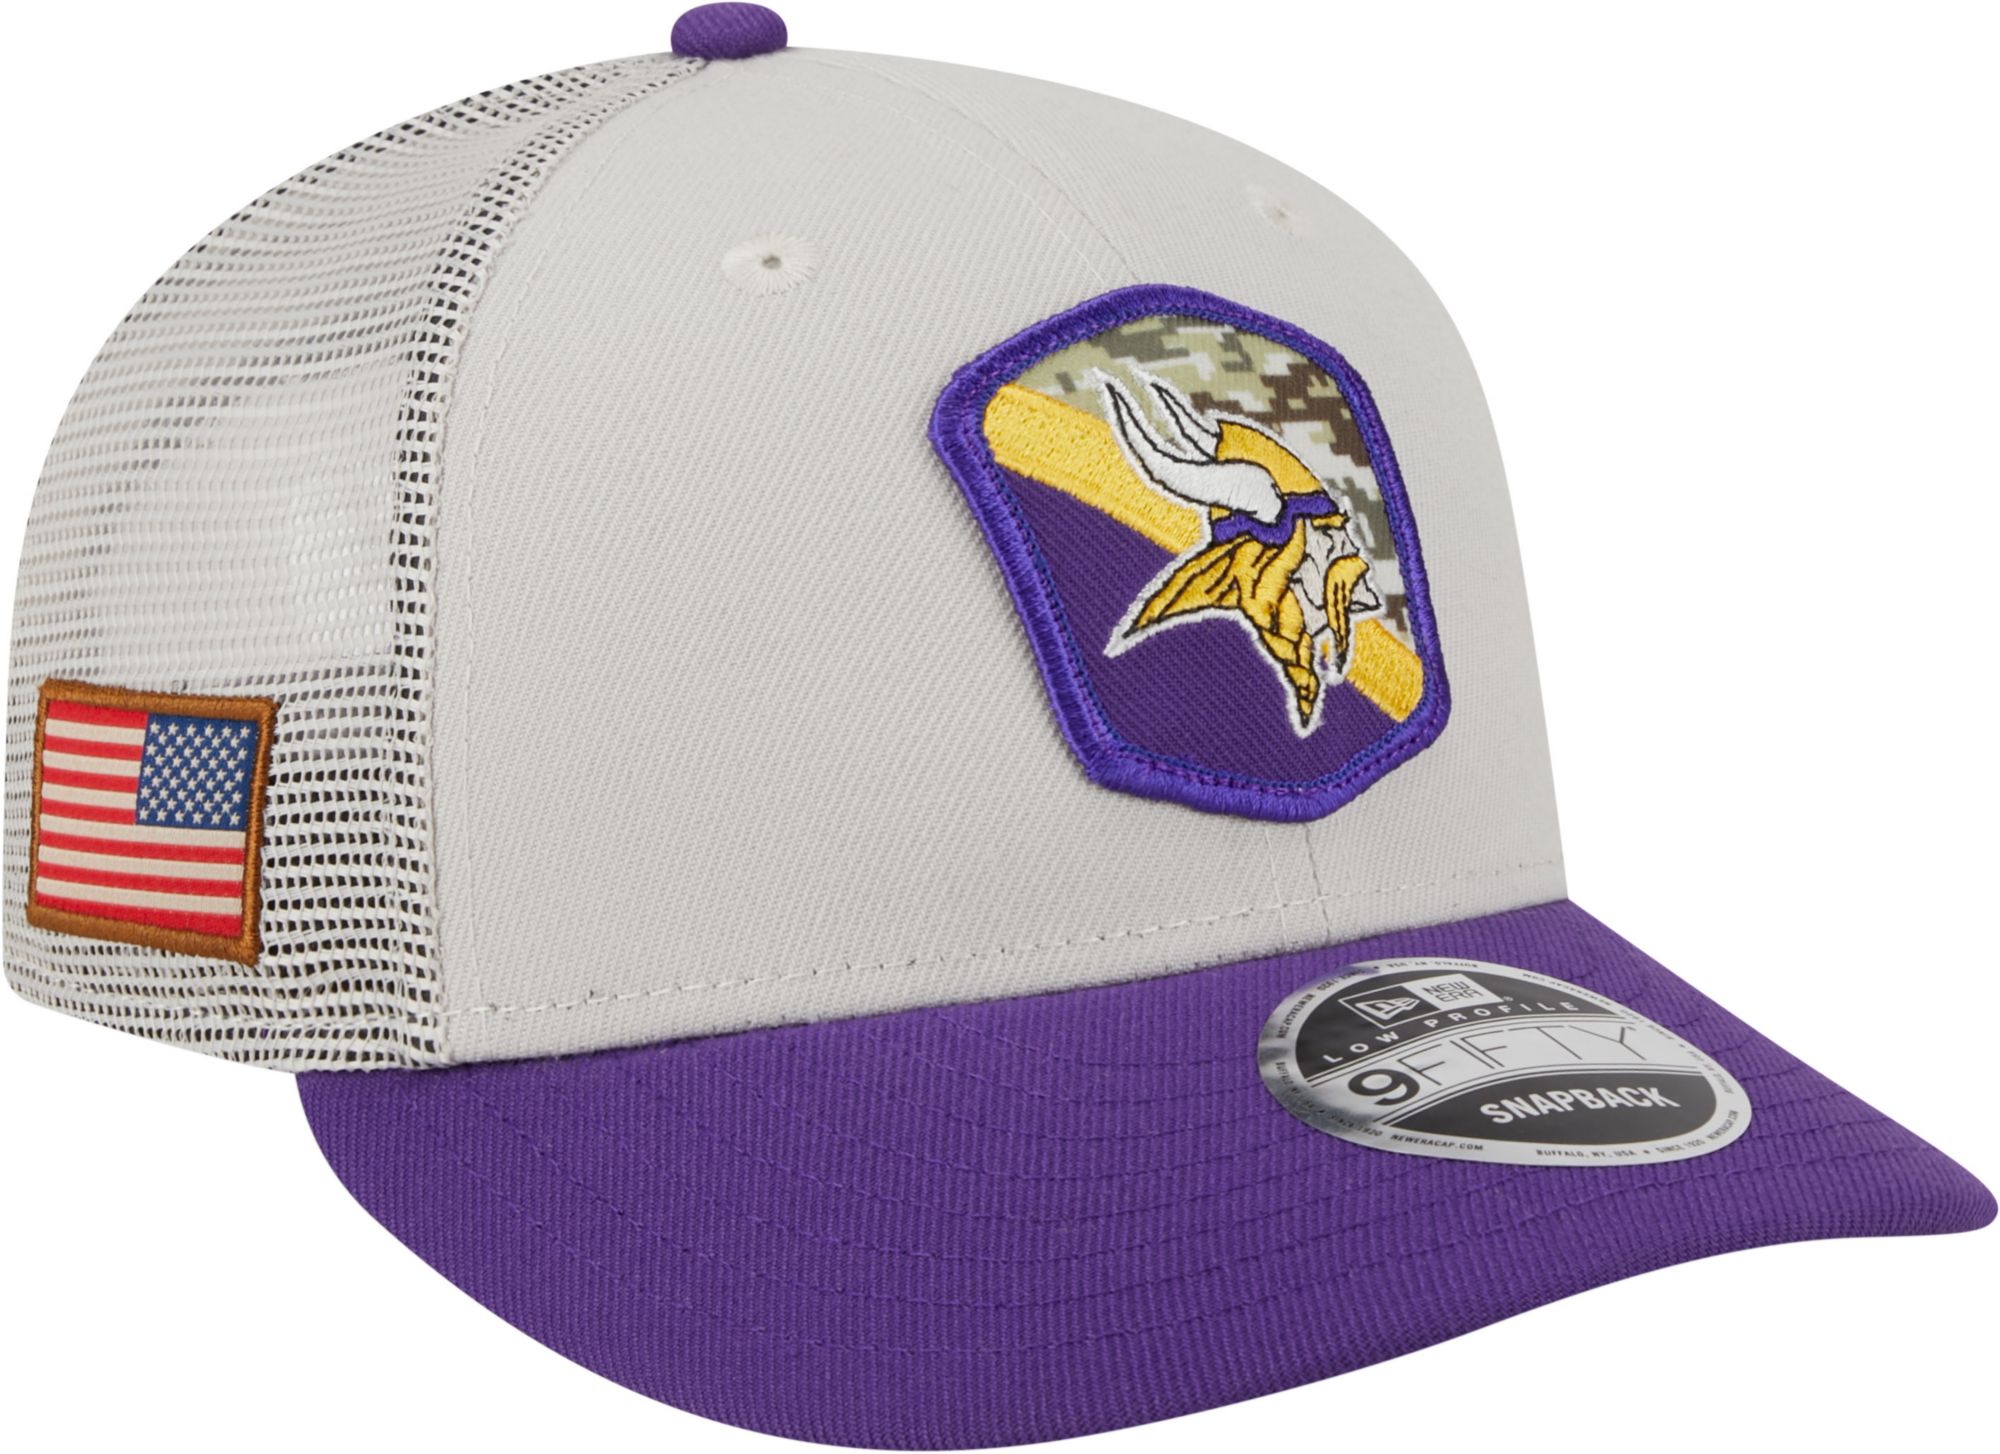 Minnesota Vikings stitched cap